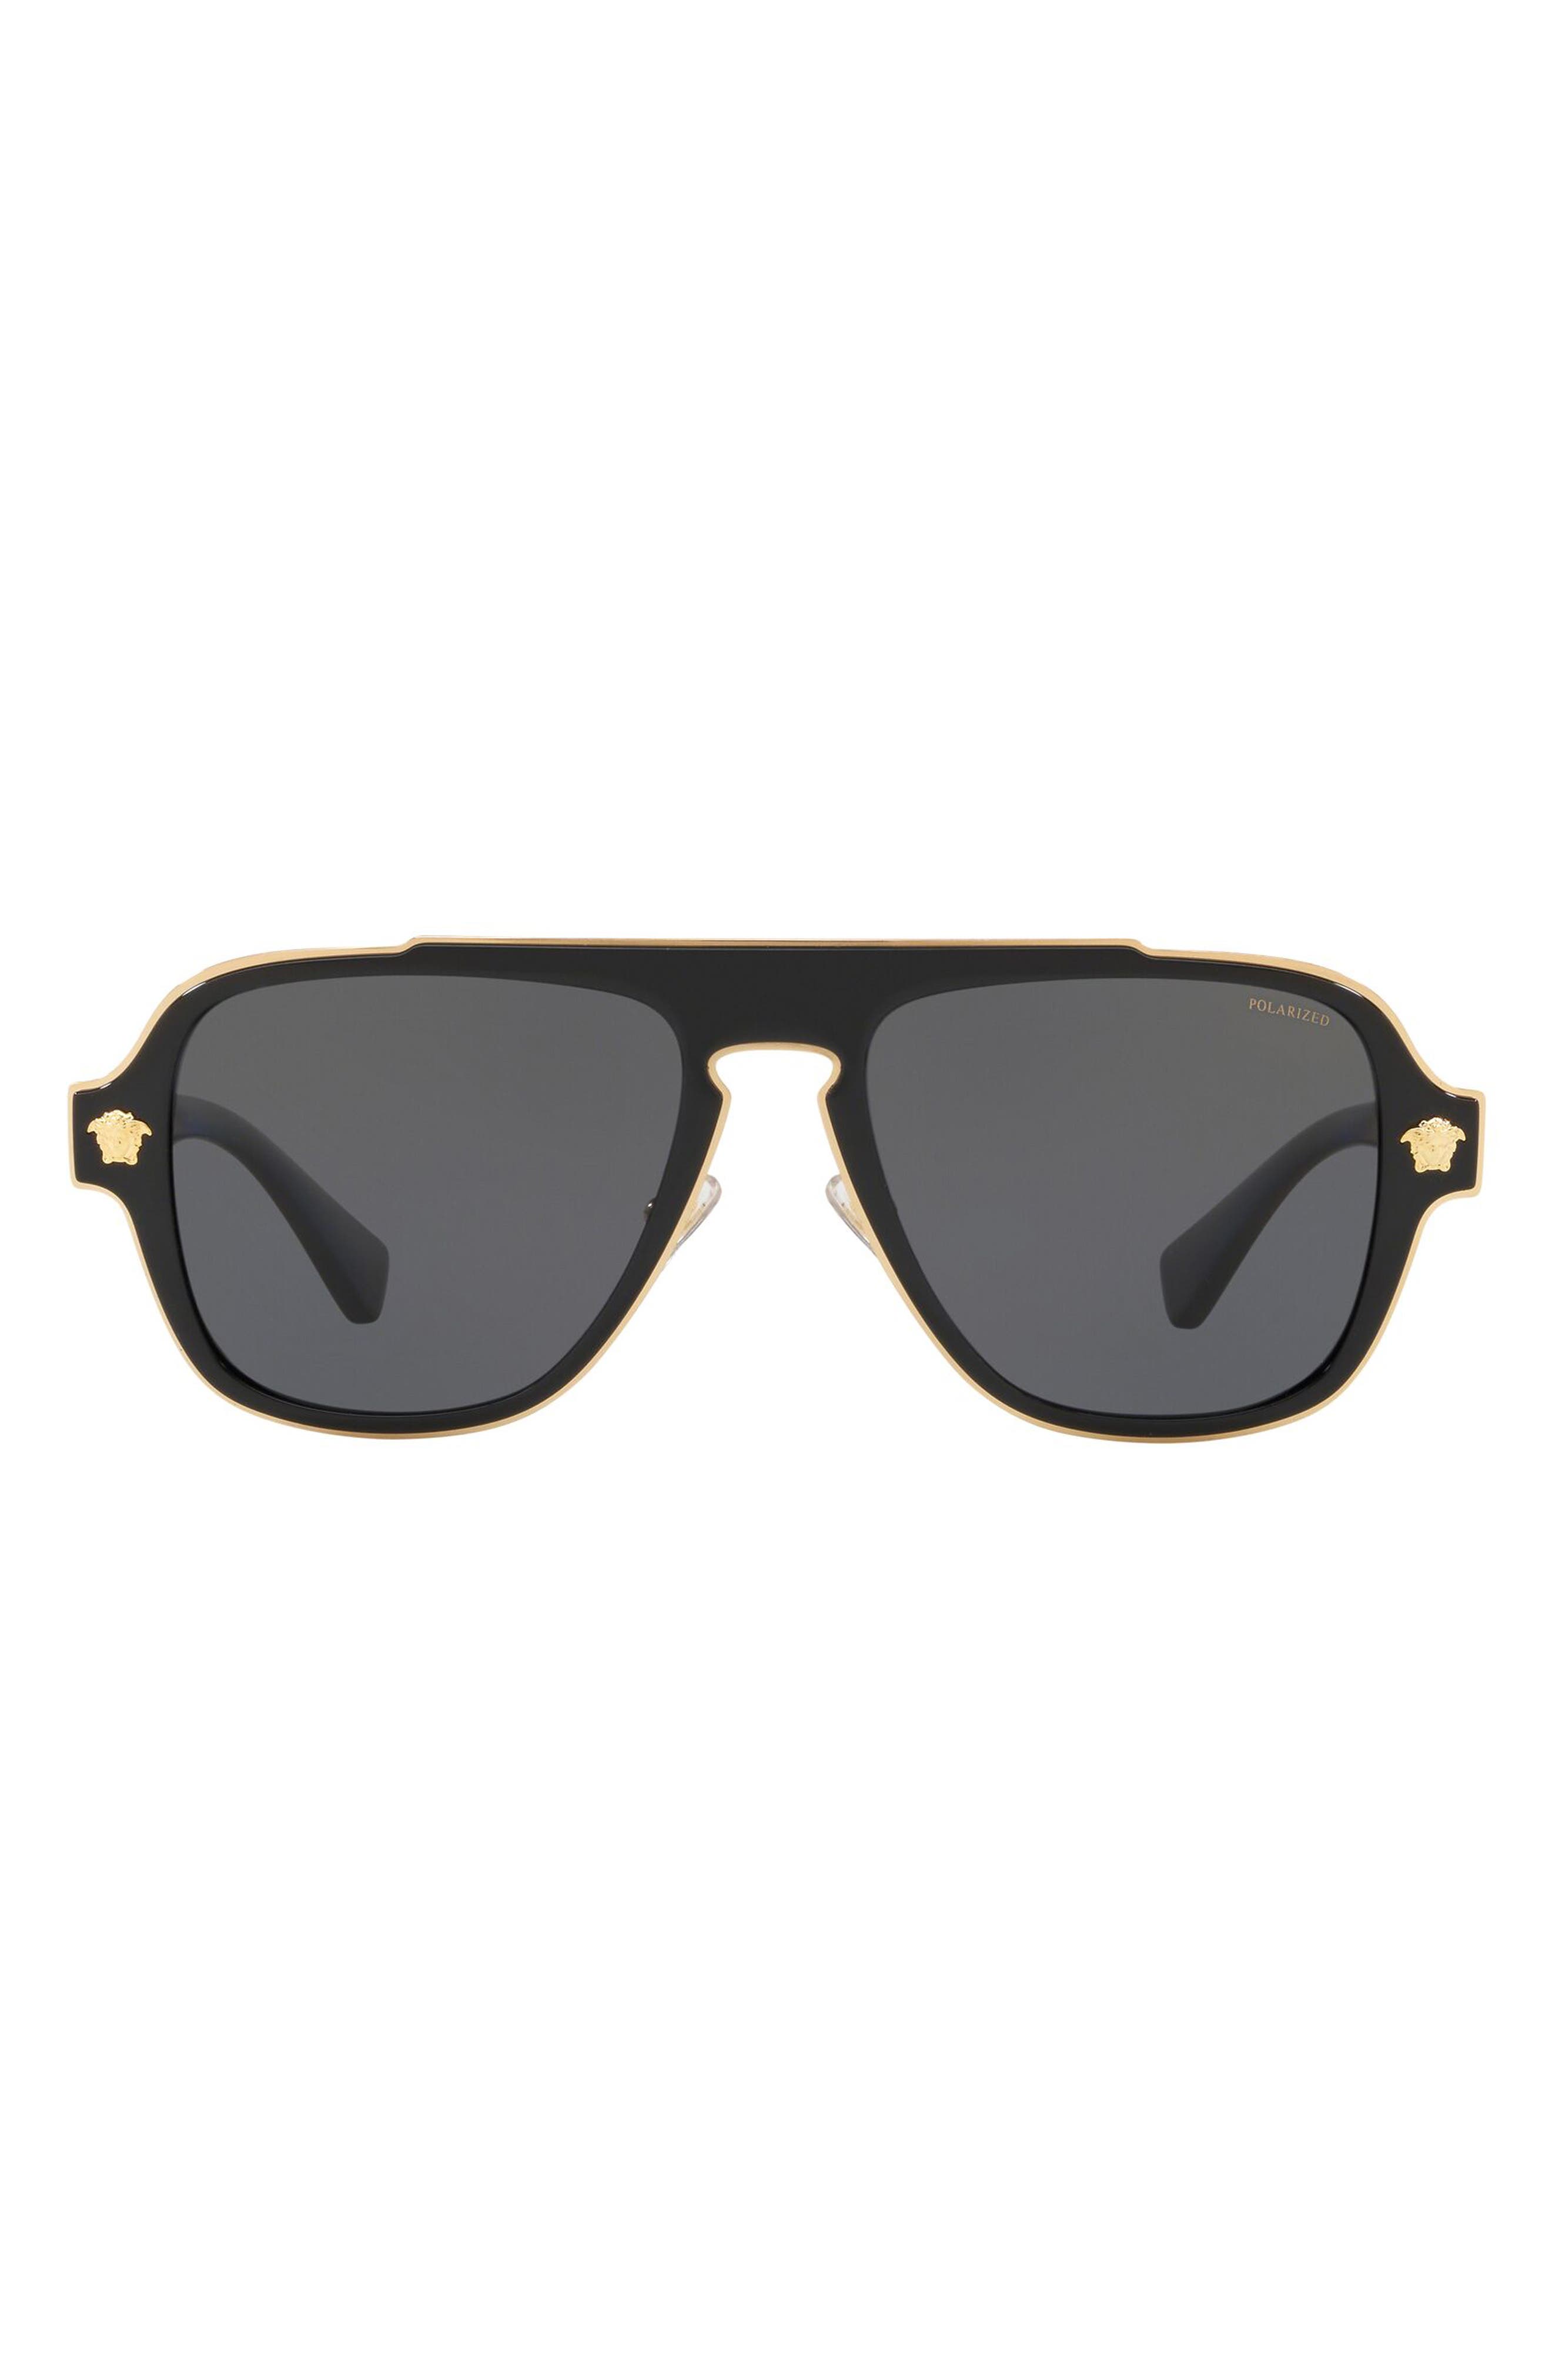 Versace 56mm Polarized Aviator Sunglasses in Black/Black Solid at Nordstrom